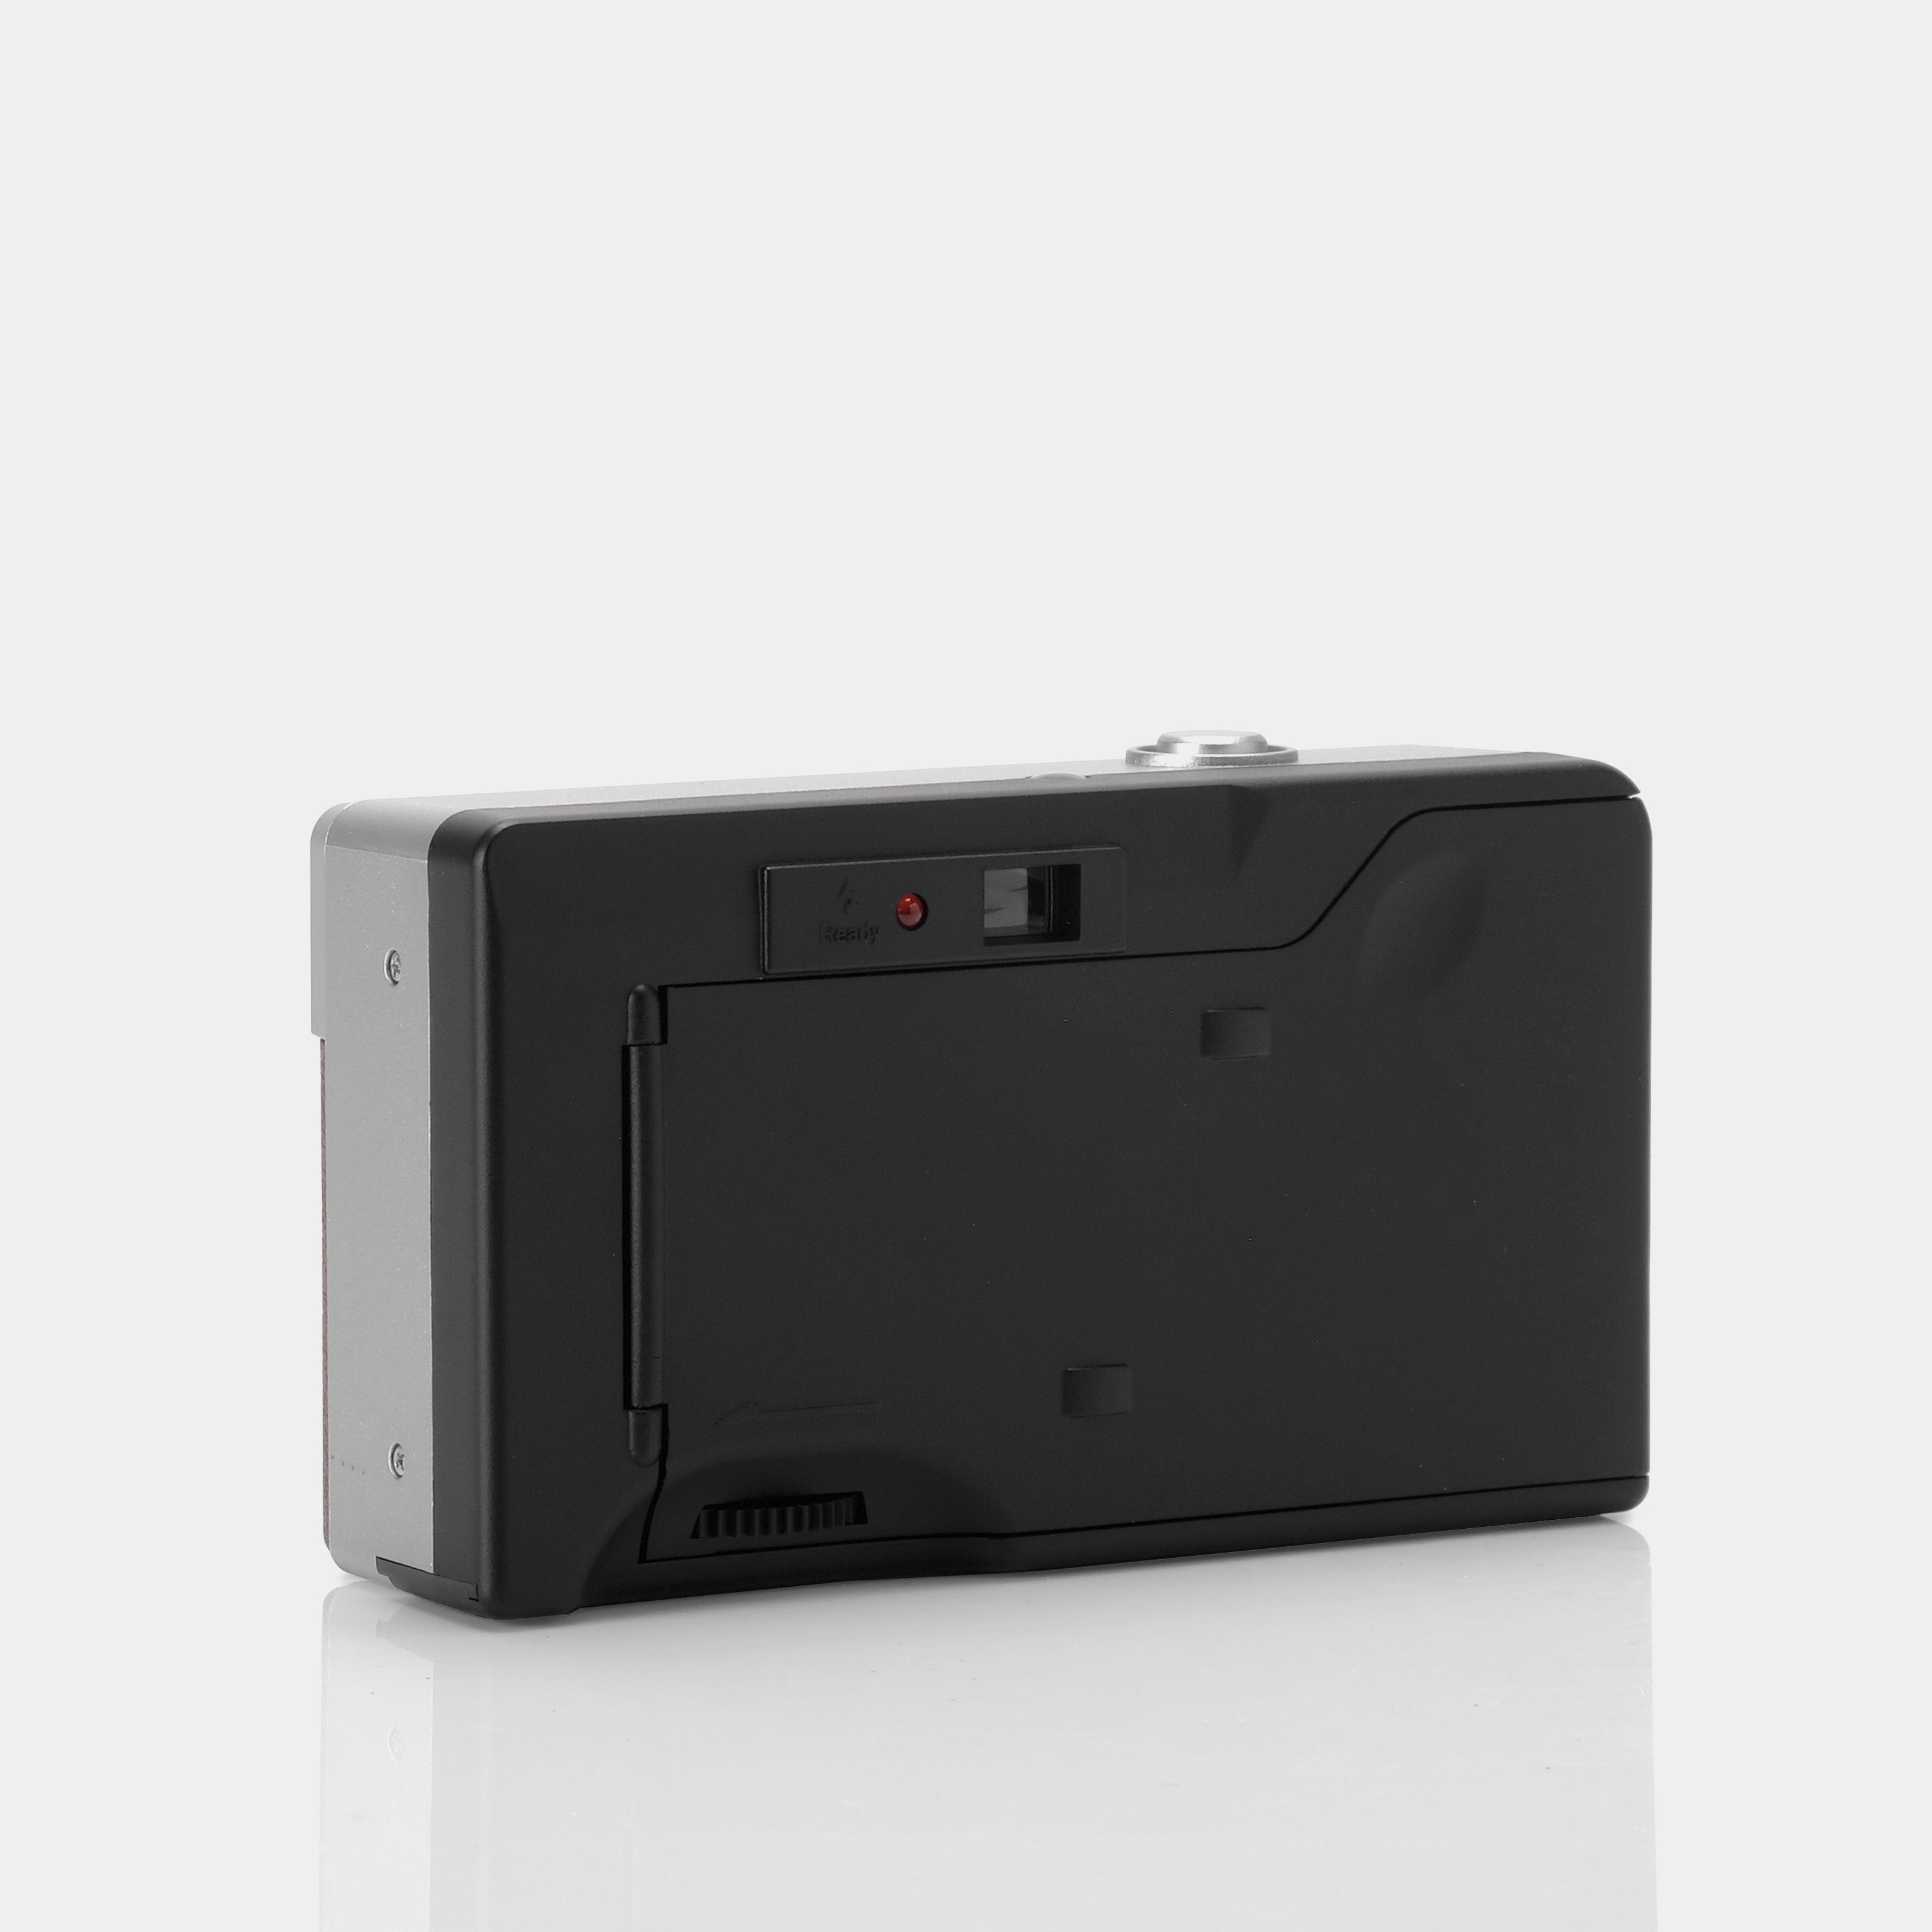 Kodak Ektar H35 35mm Half Frame Point and Shoot Film Camera - Black